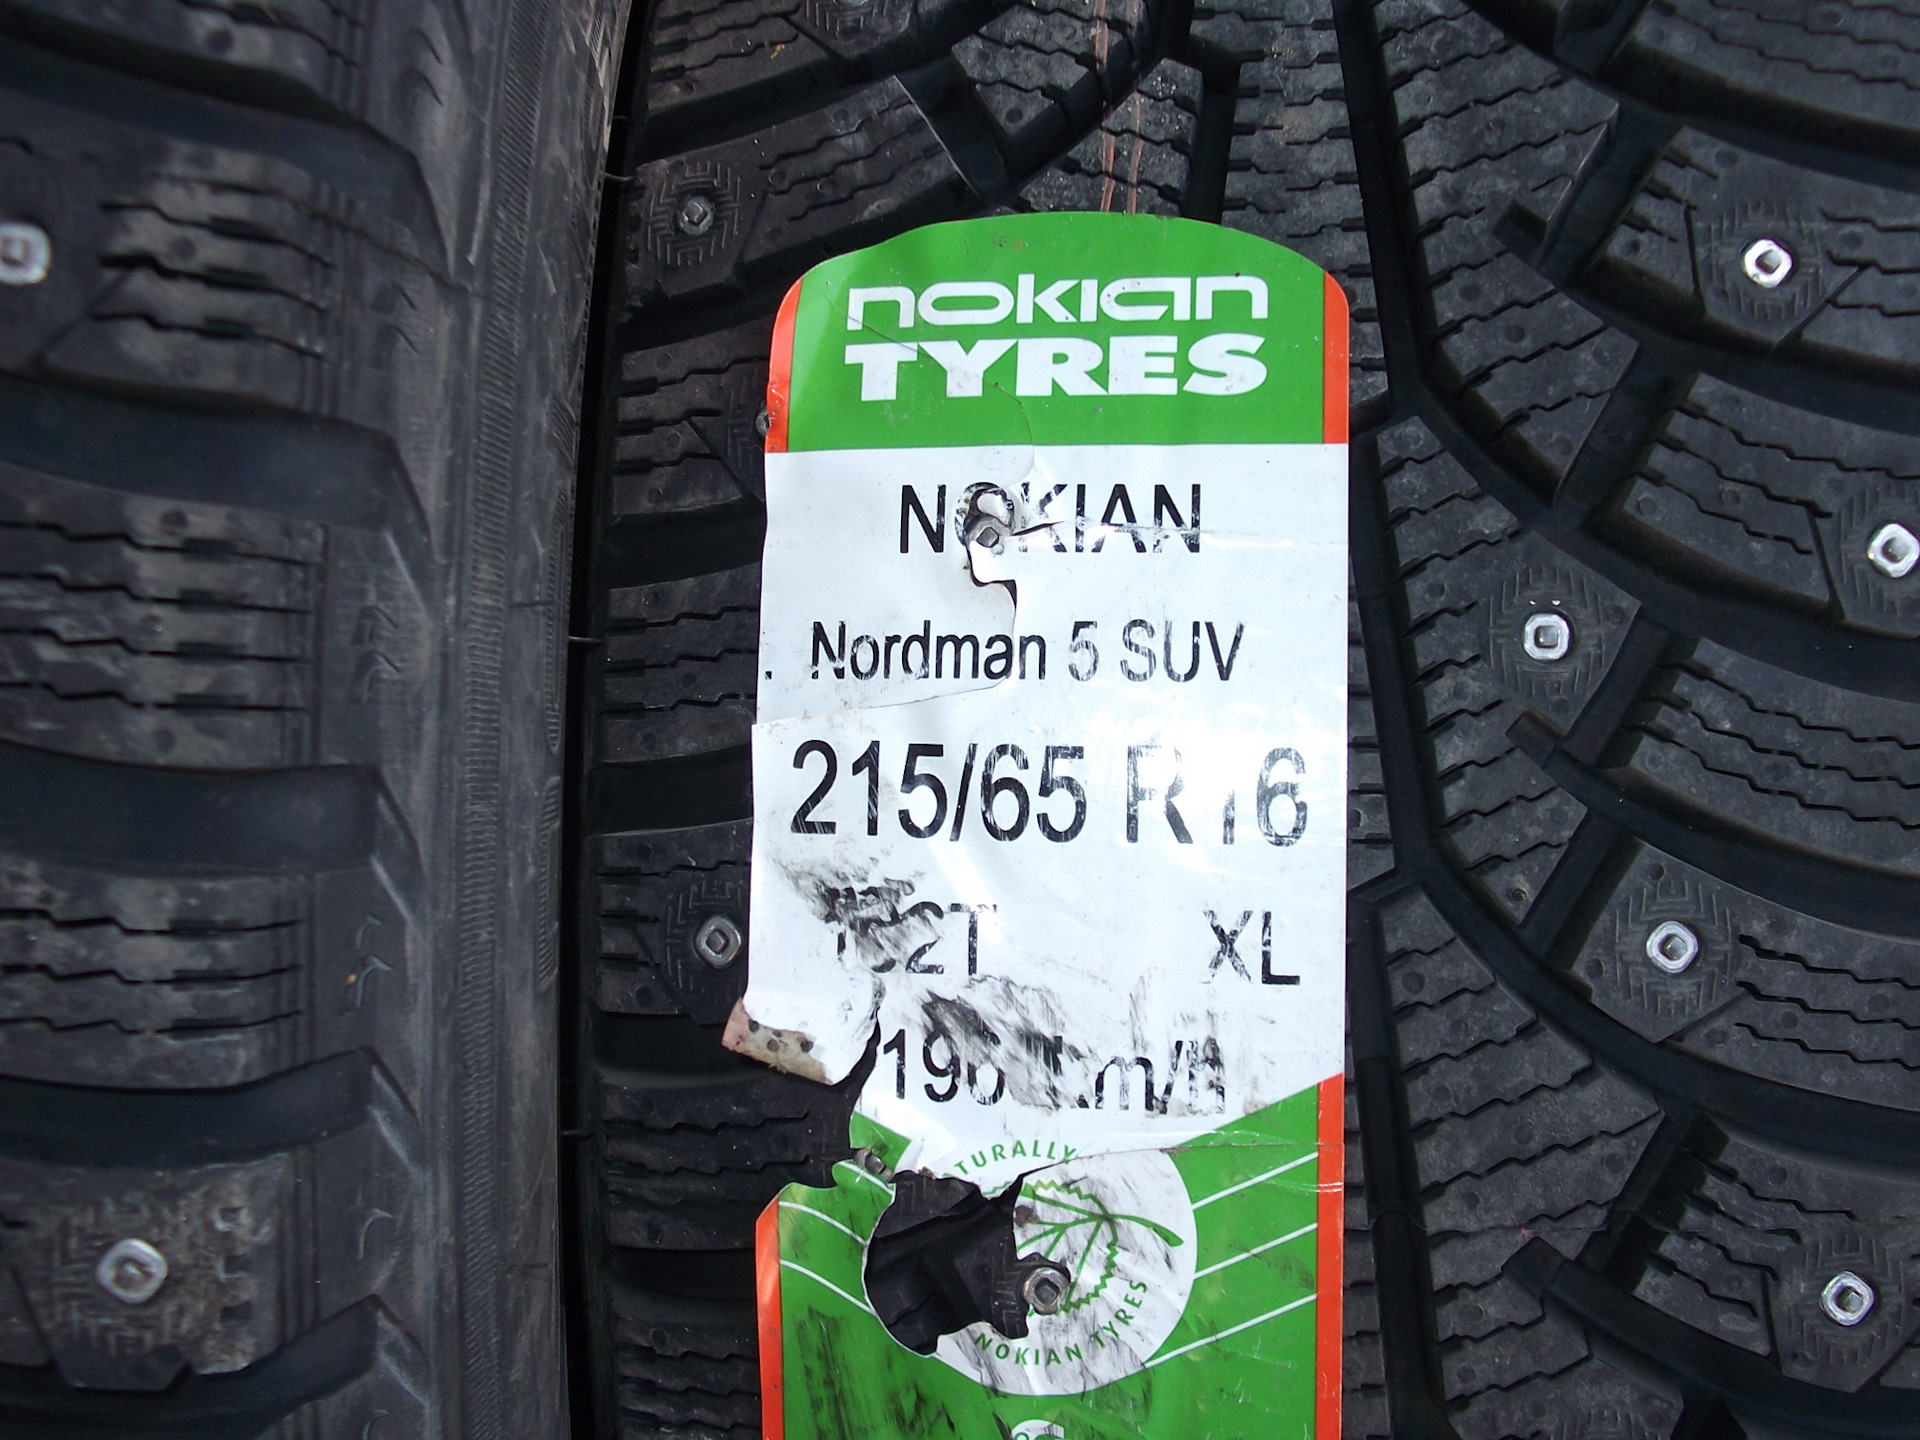 Nordman suv отзывы. Нордман 5. Nokian Tyres Nordman 5 SUV. Нокиан Нордман 7. Nordman 5 шины.